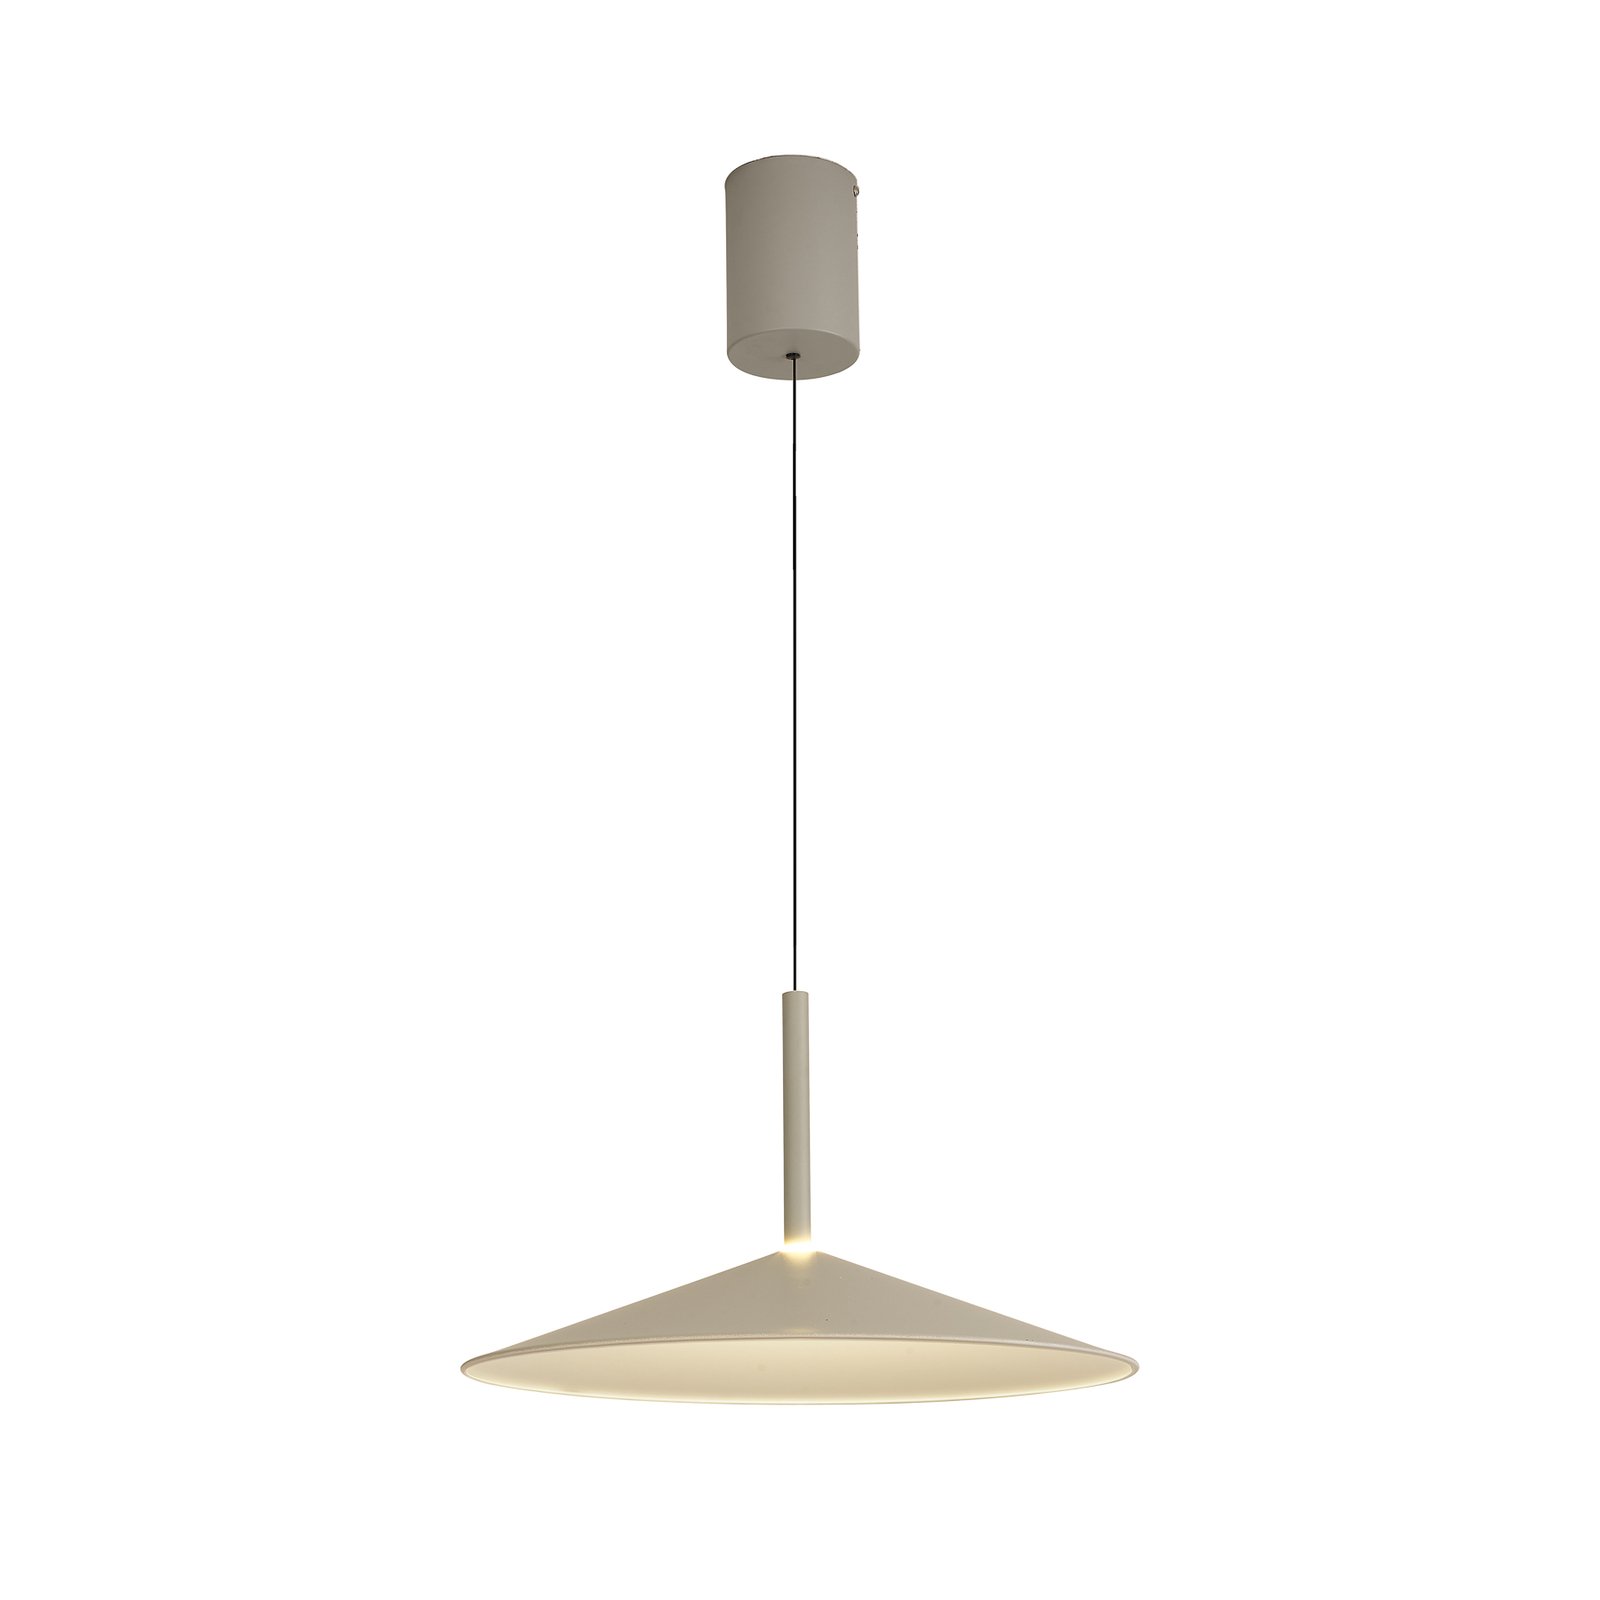 Lampada a sospensione Calice LED, grigio, Ø 47,5 cm, regolabile in altezza